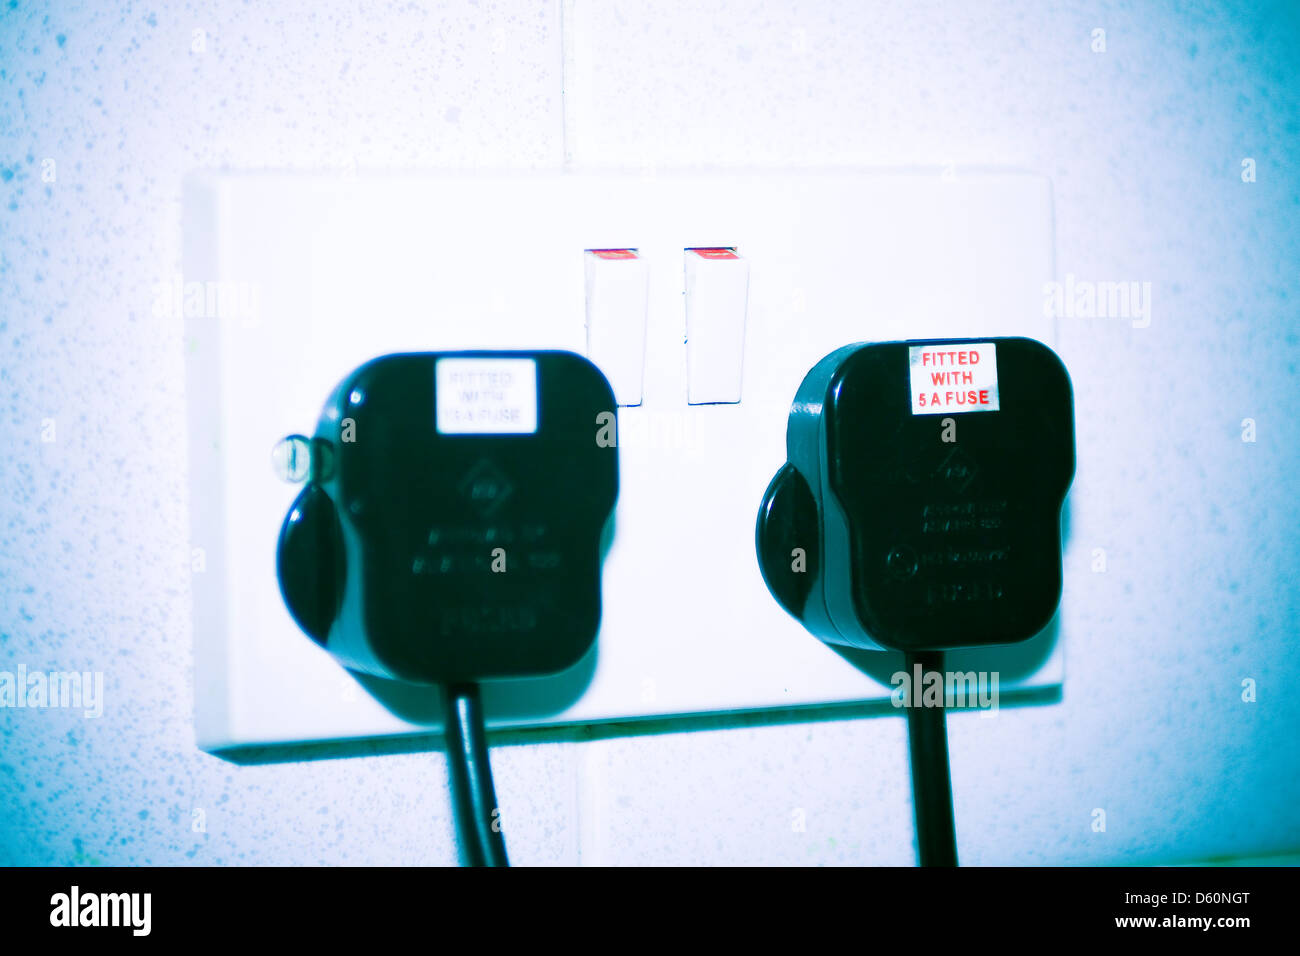 Plugs in double wall socket Stock Photo